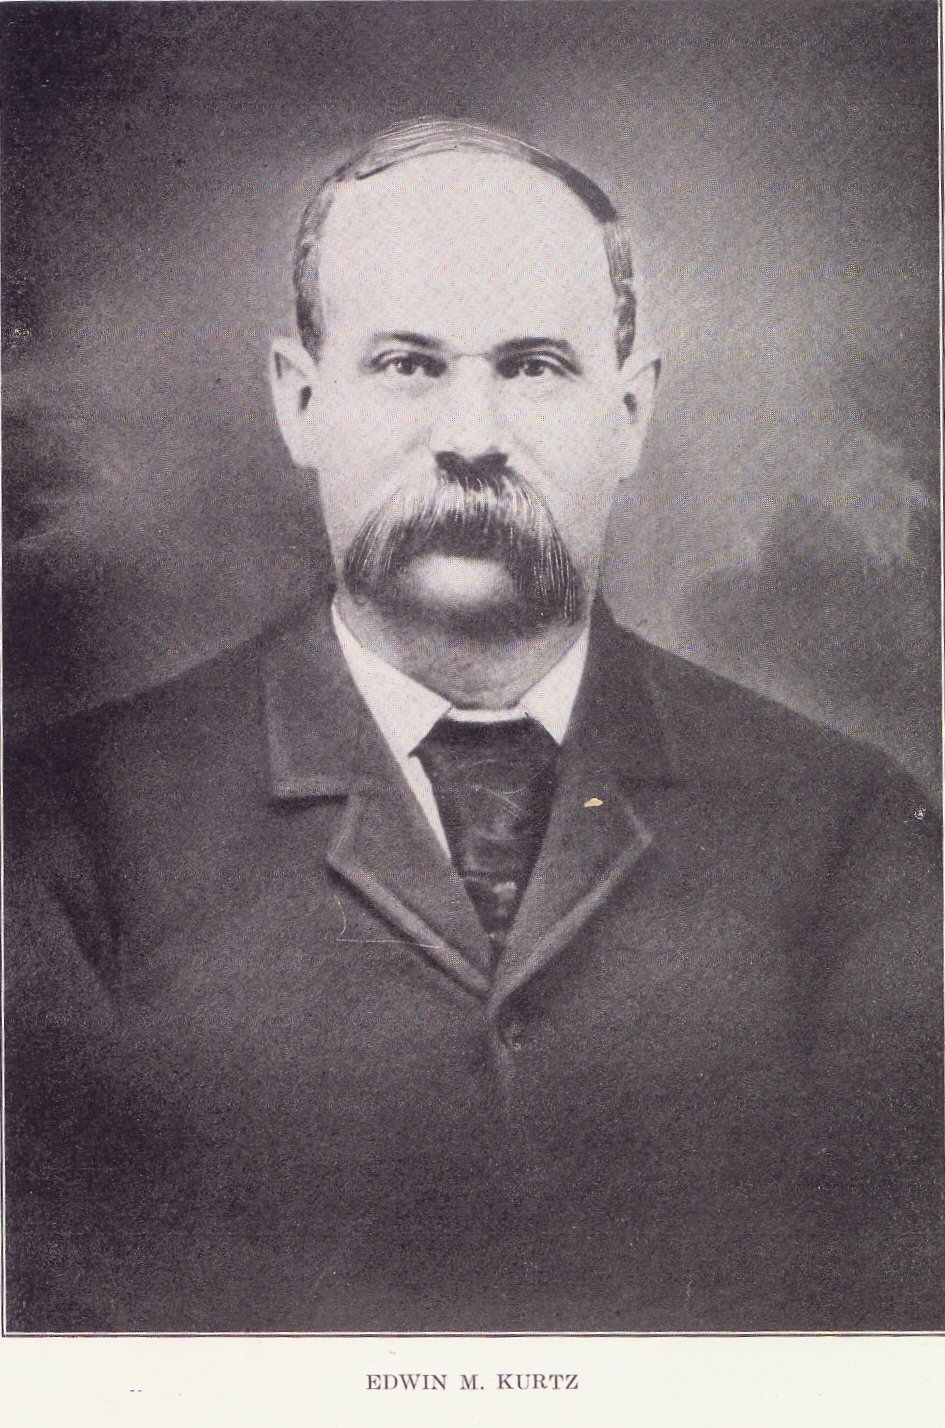 Edwin M. Kurtz